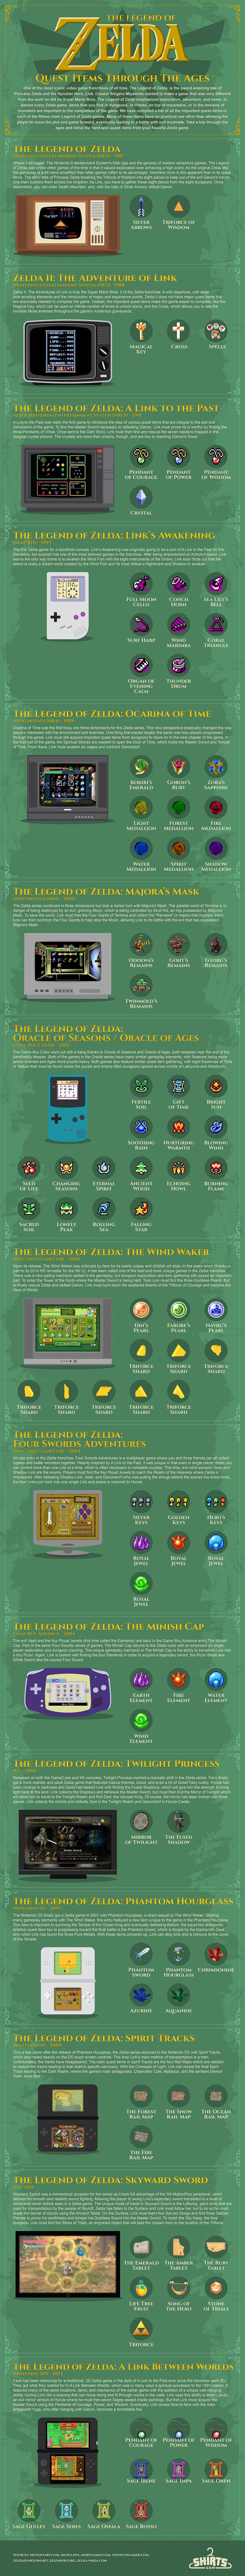 the-legend-of-zelda-quest-items-infographic